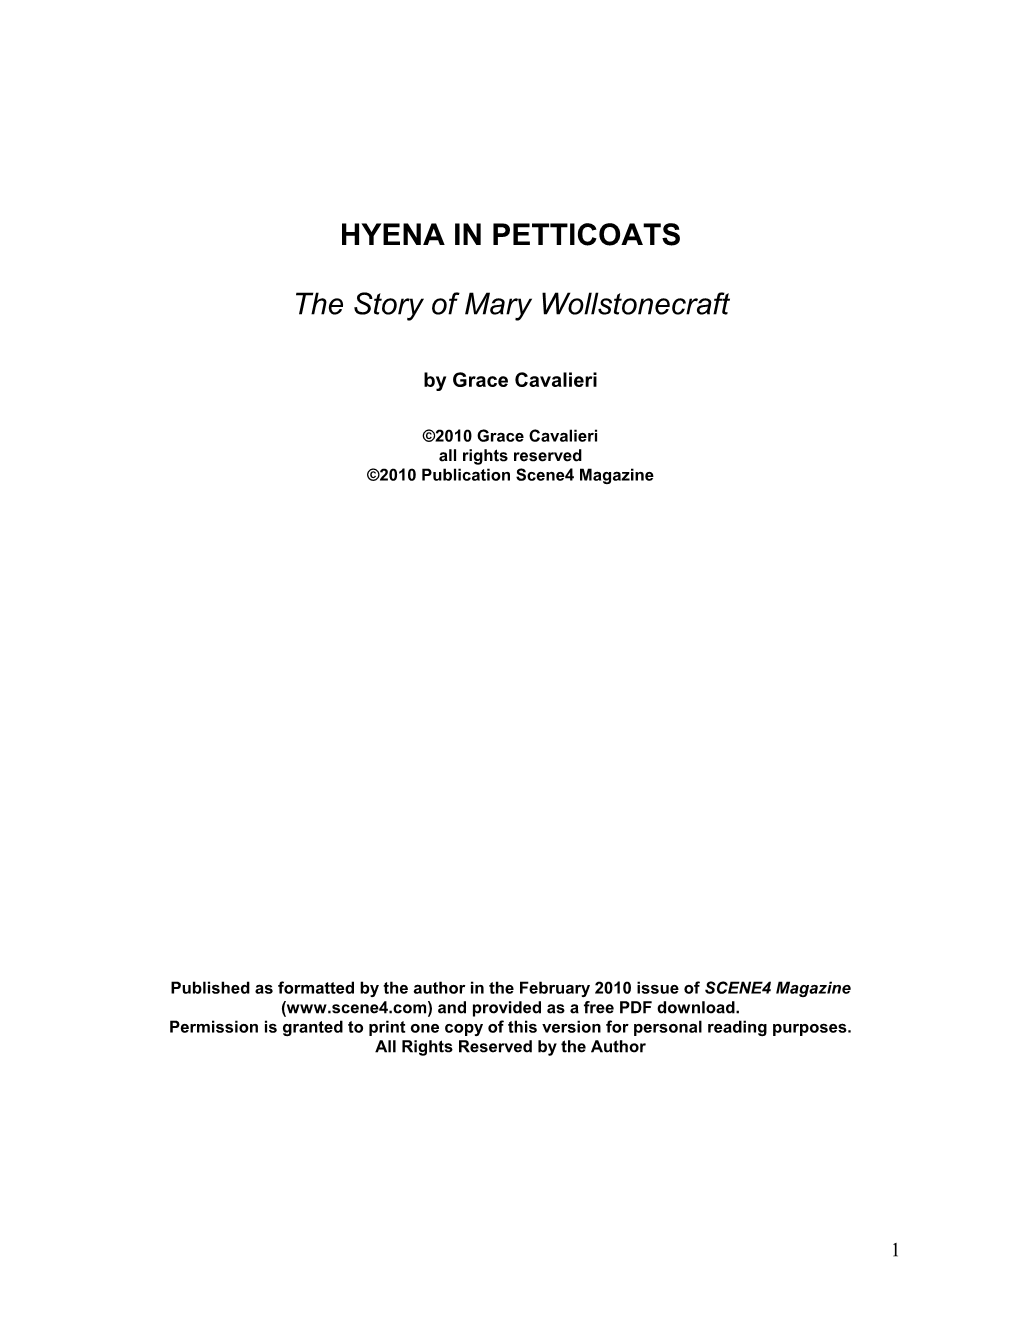 Hyena in Petticoats